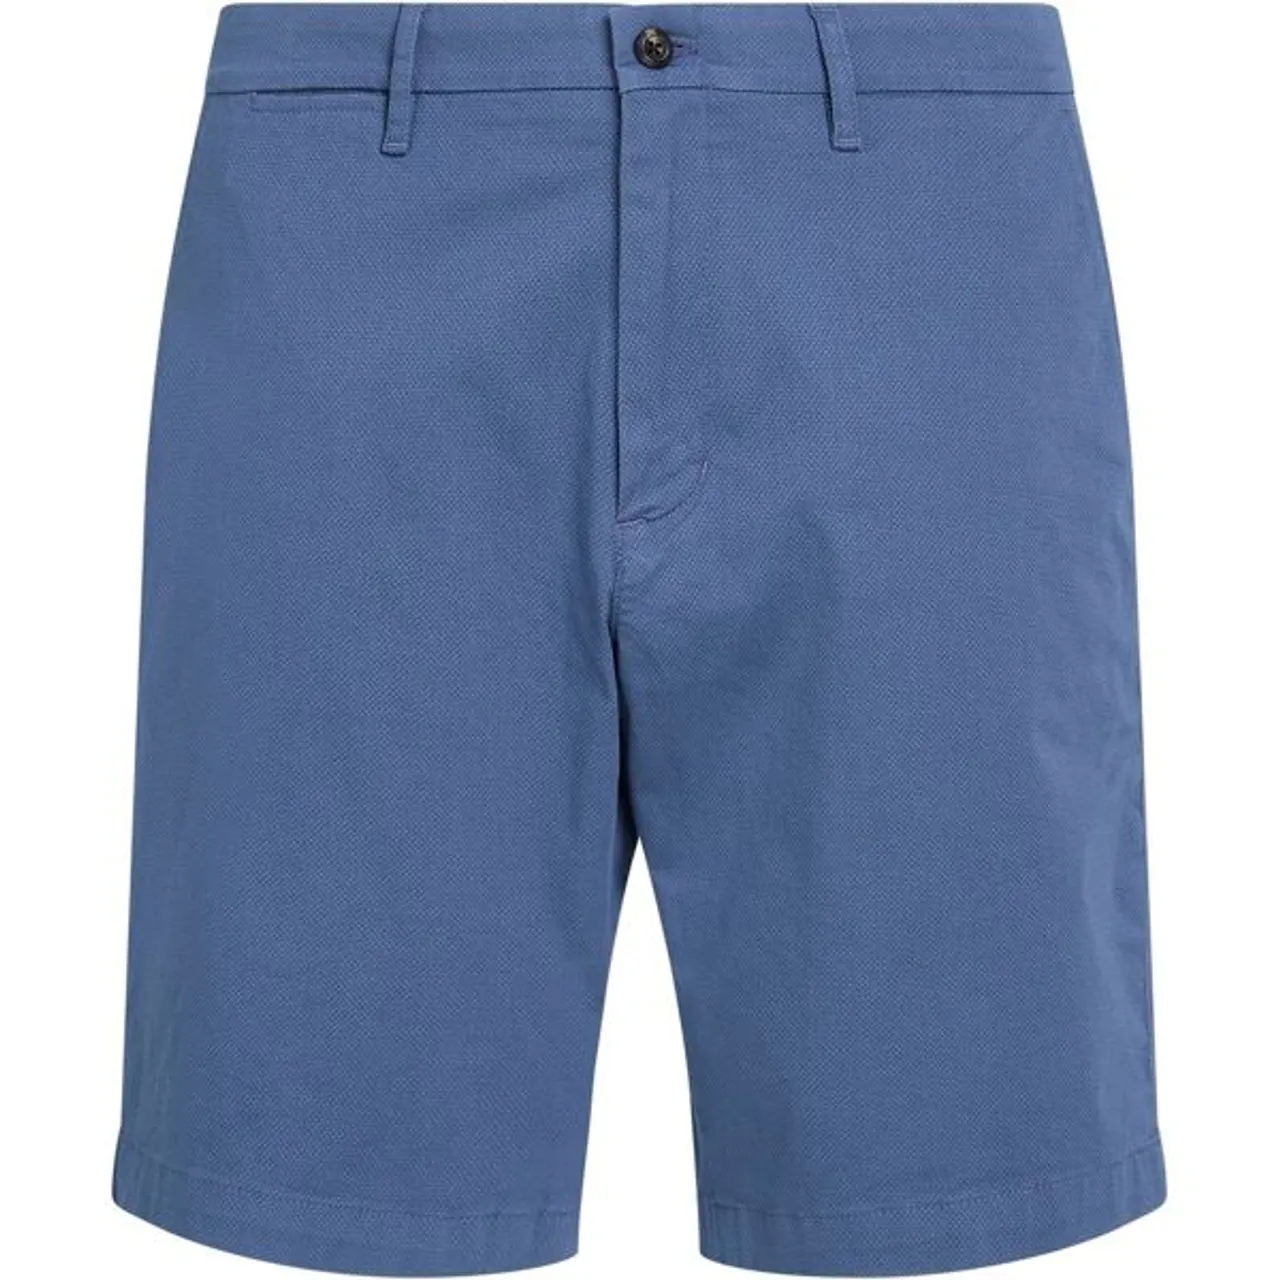 Shorts TOMMY HILFIGER "HARLEM PRINTED STRUCTURE" Gr. 31, N-Gr, blau (aegean sea) Herren Hosen Shorts